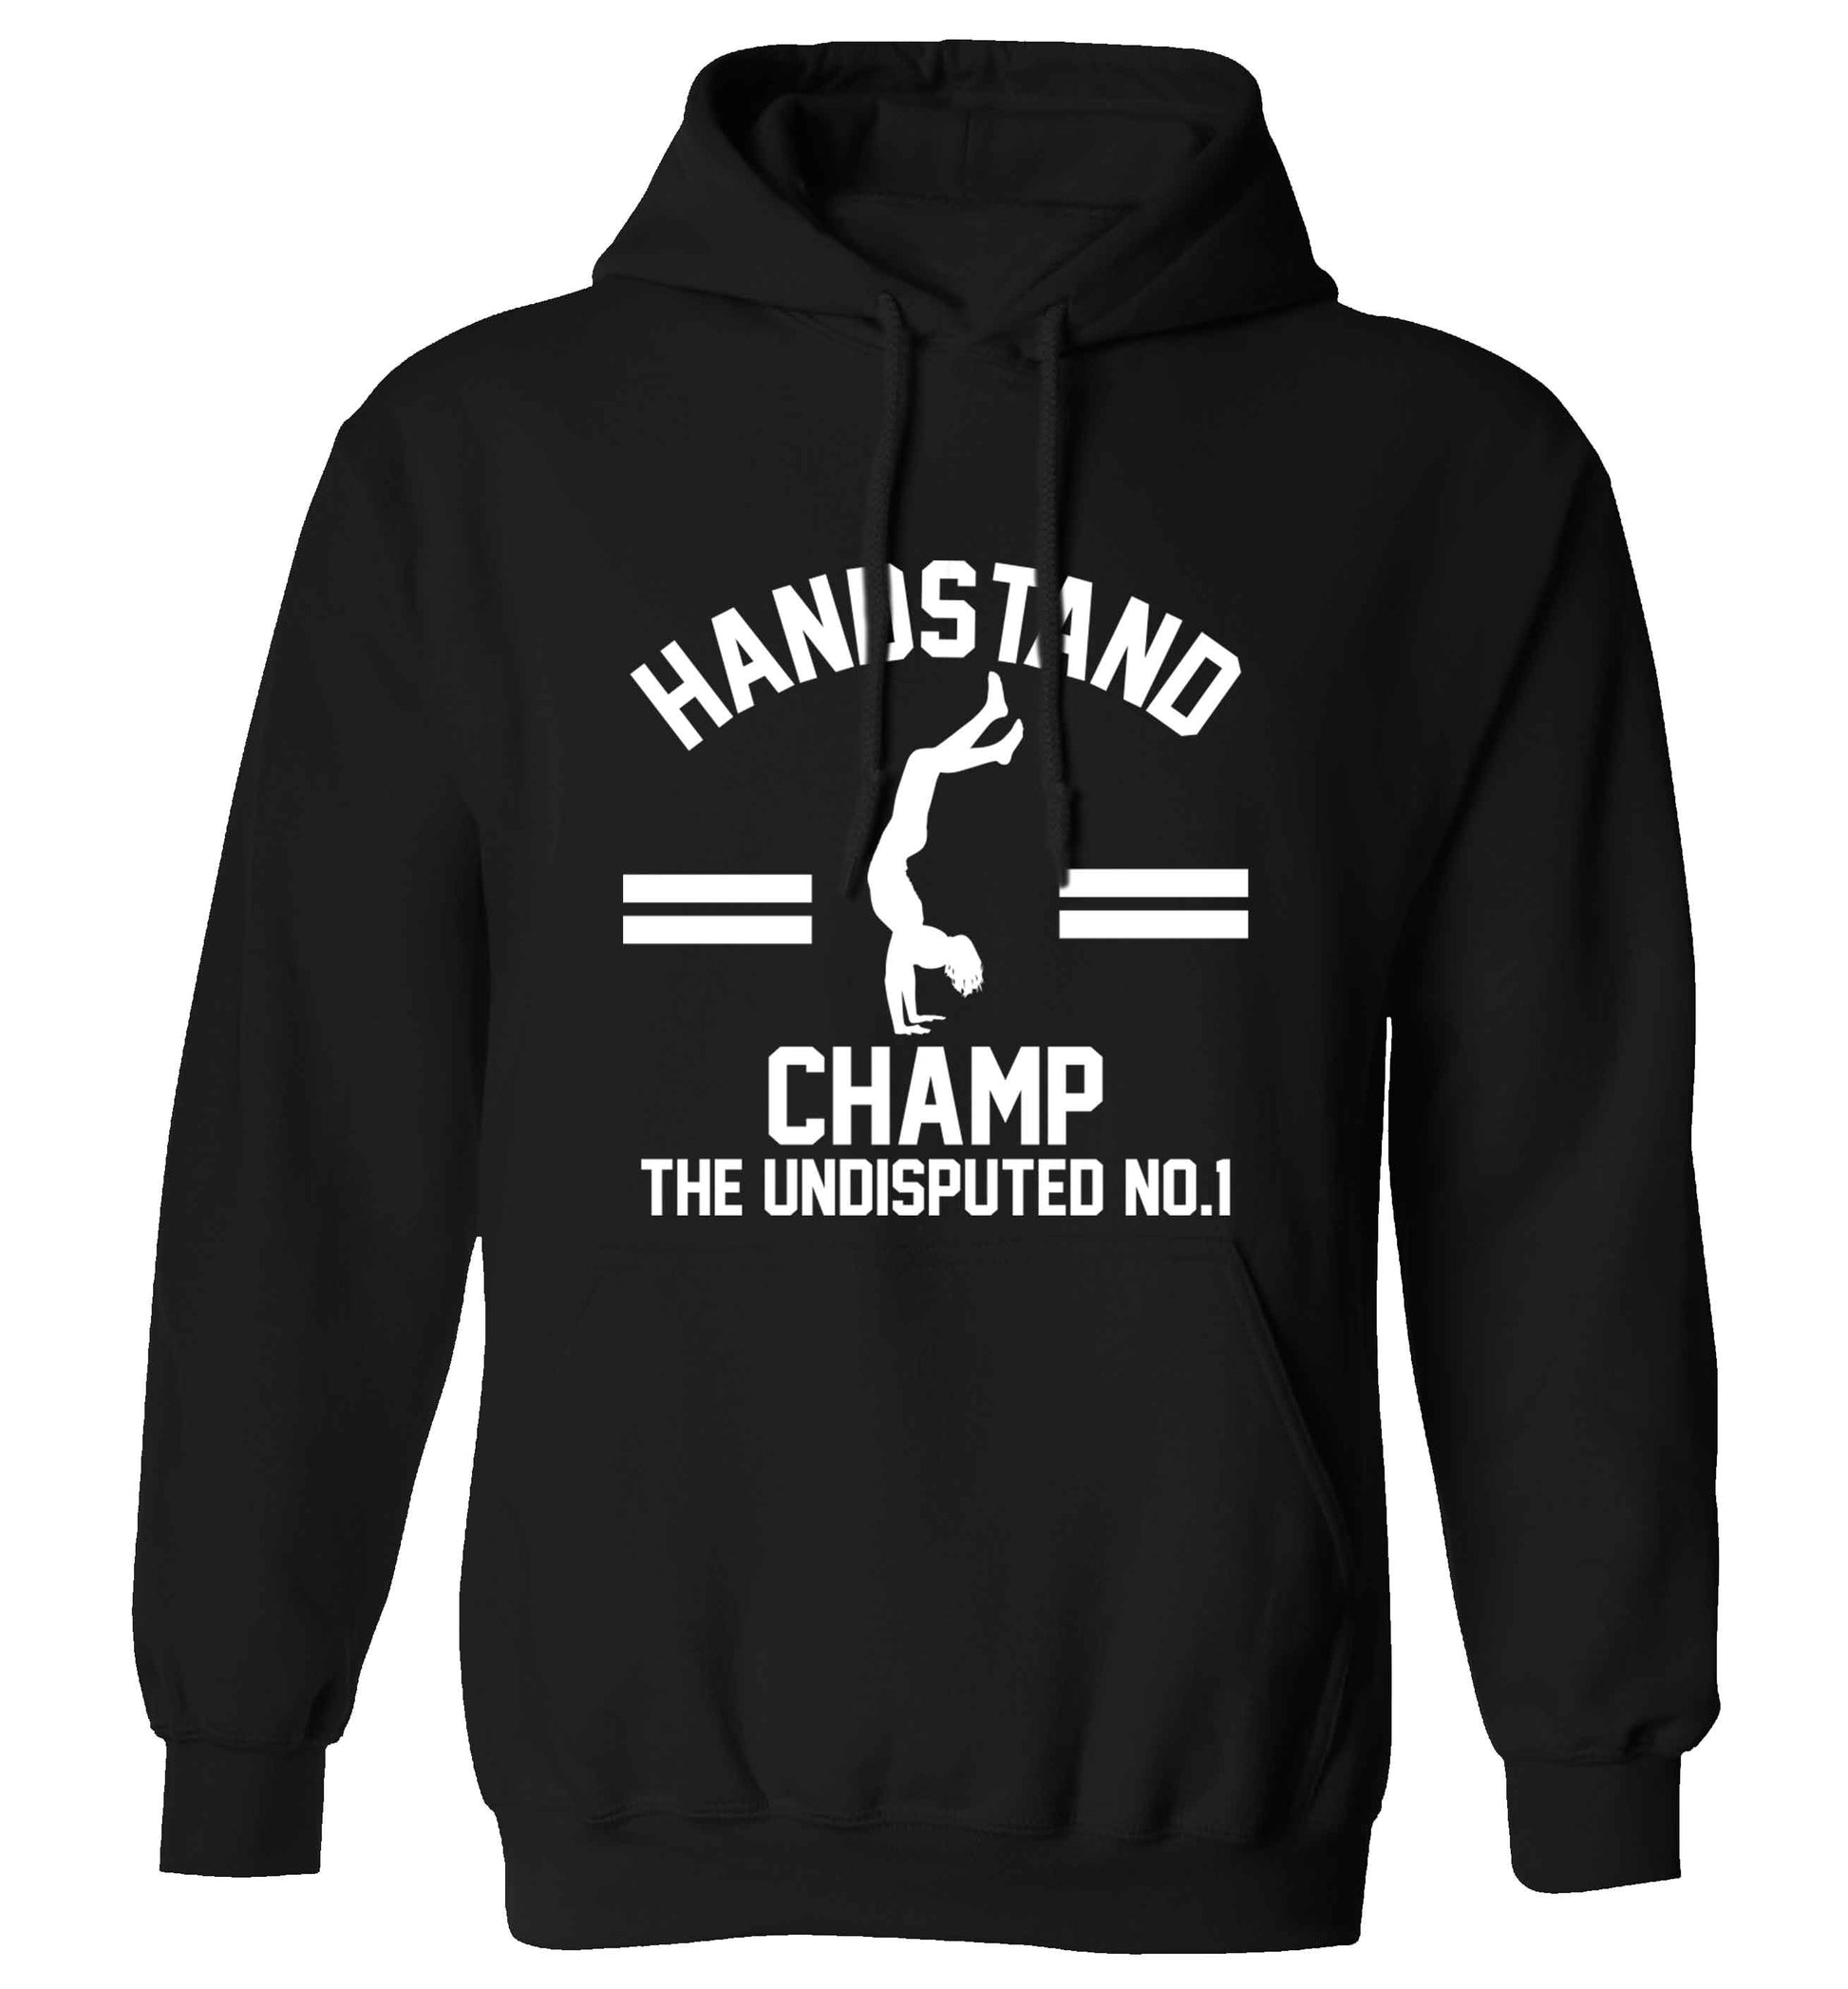 Undisputed handstand championship no.1  adults unisex black hoodie 2XL